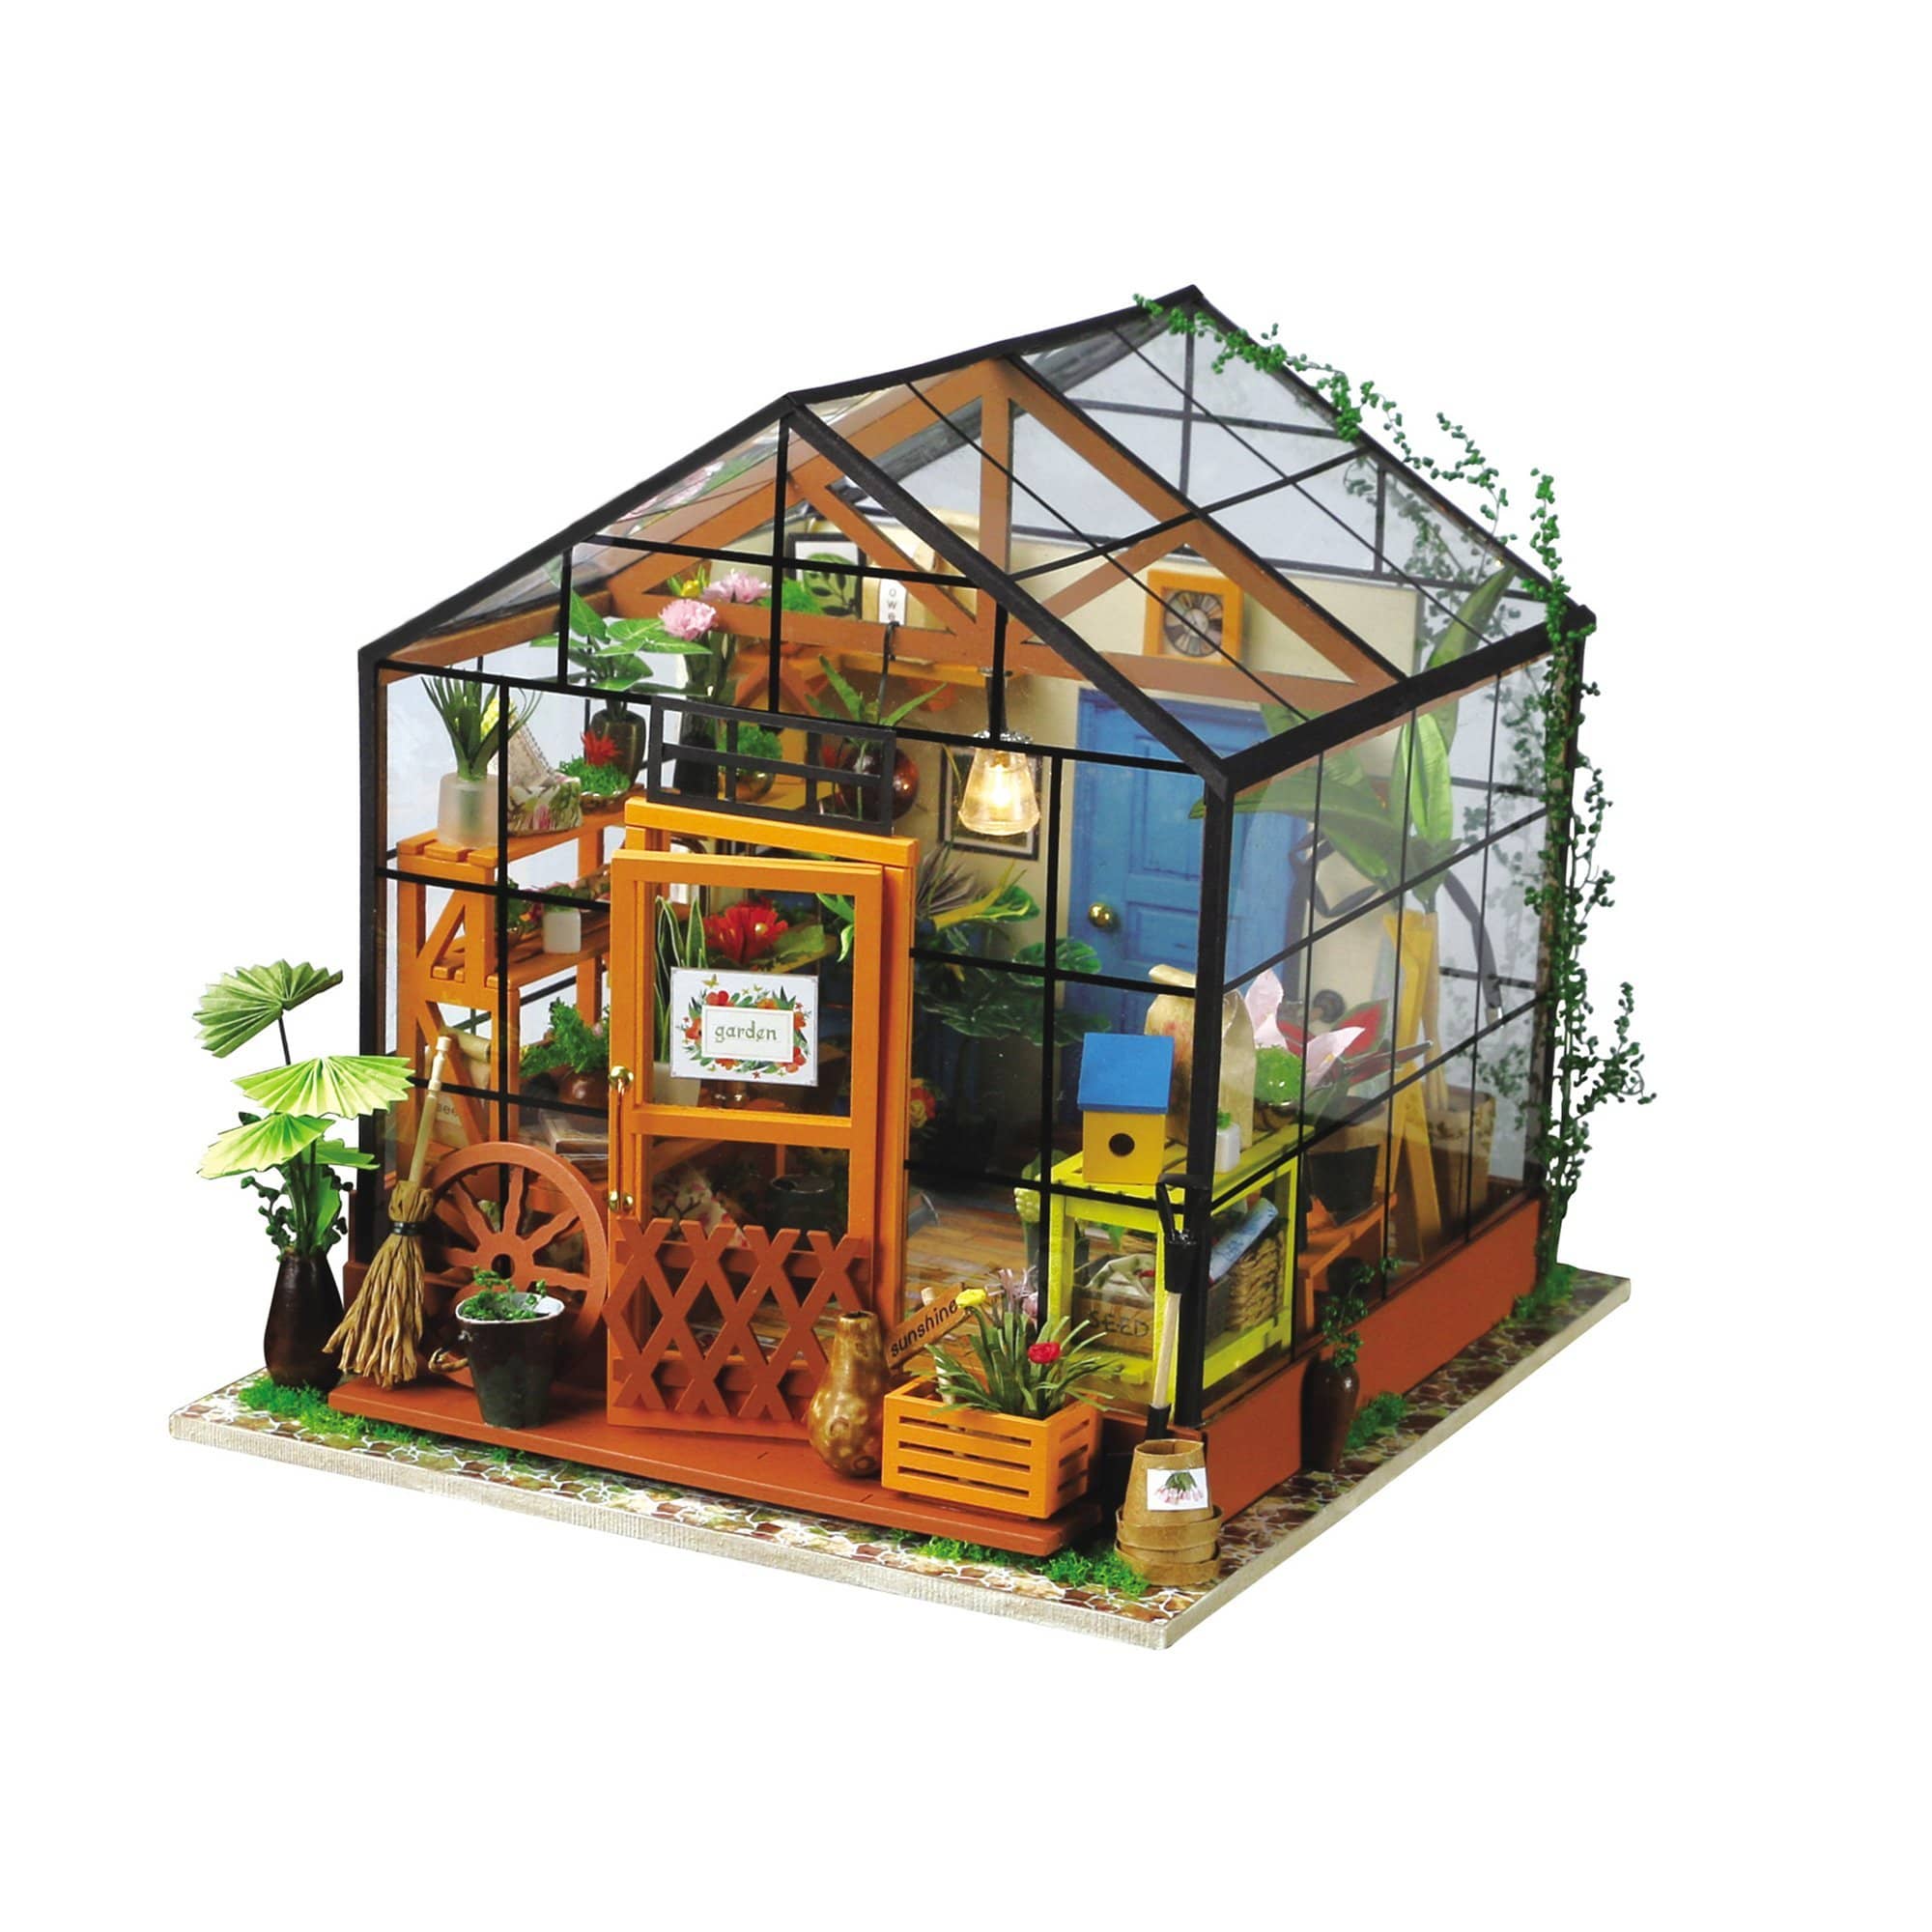 Cathys Flower House - Diy Miniature Arts & Crafts